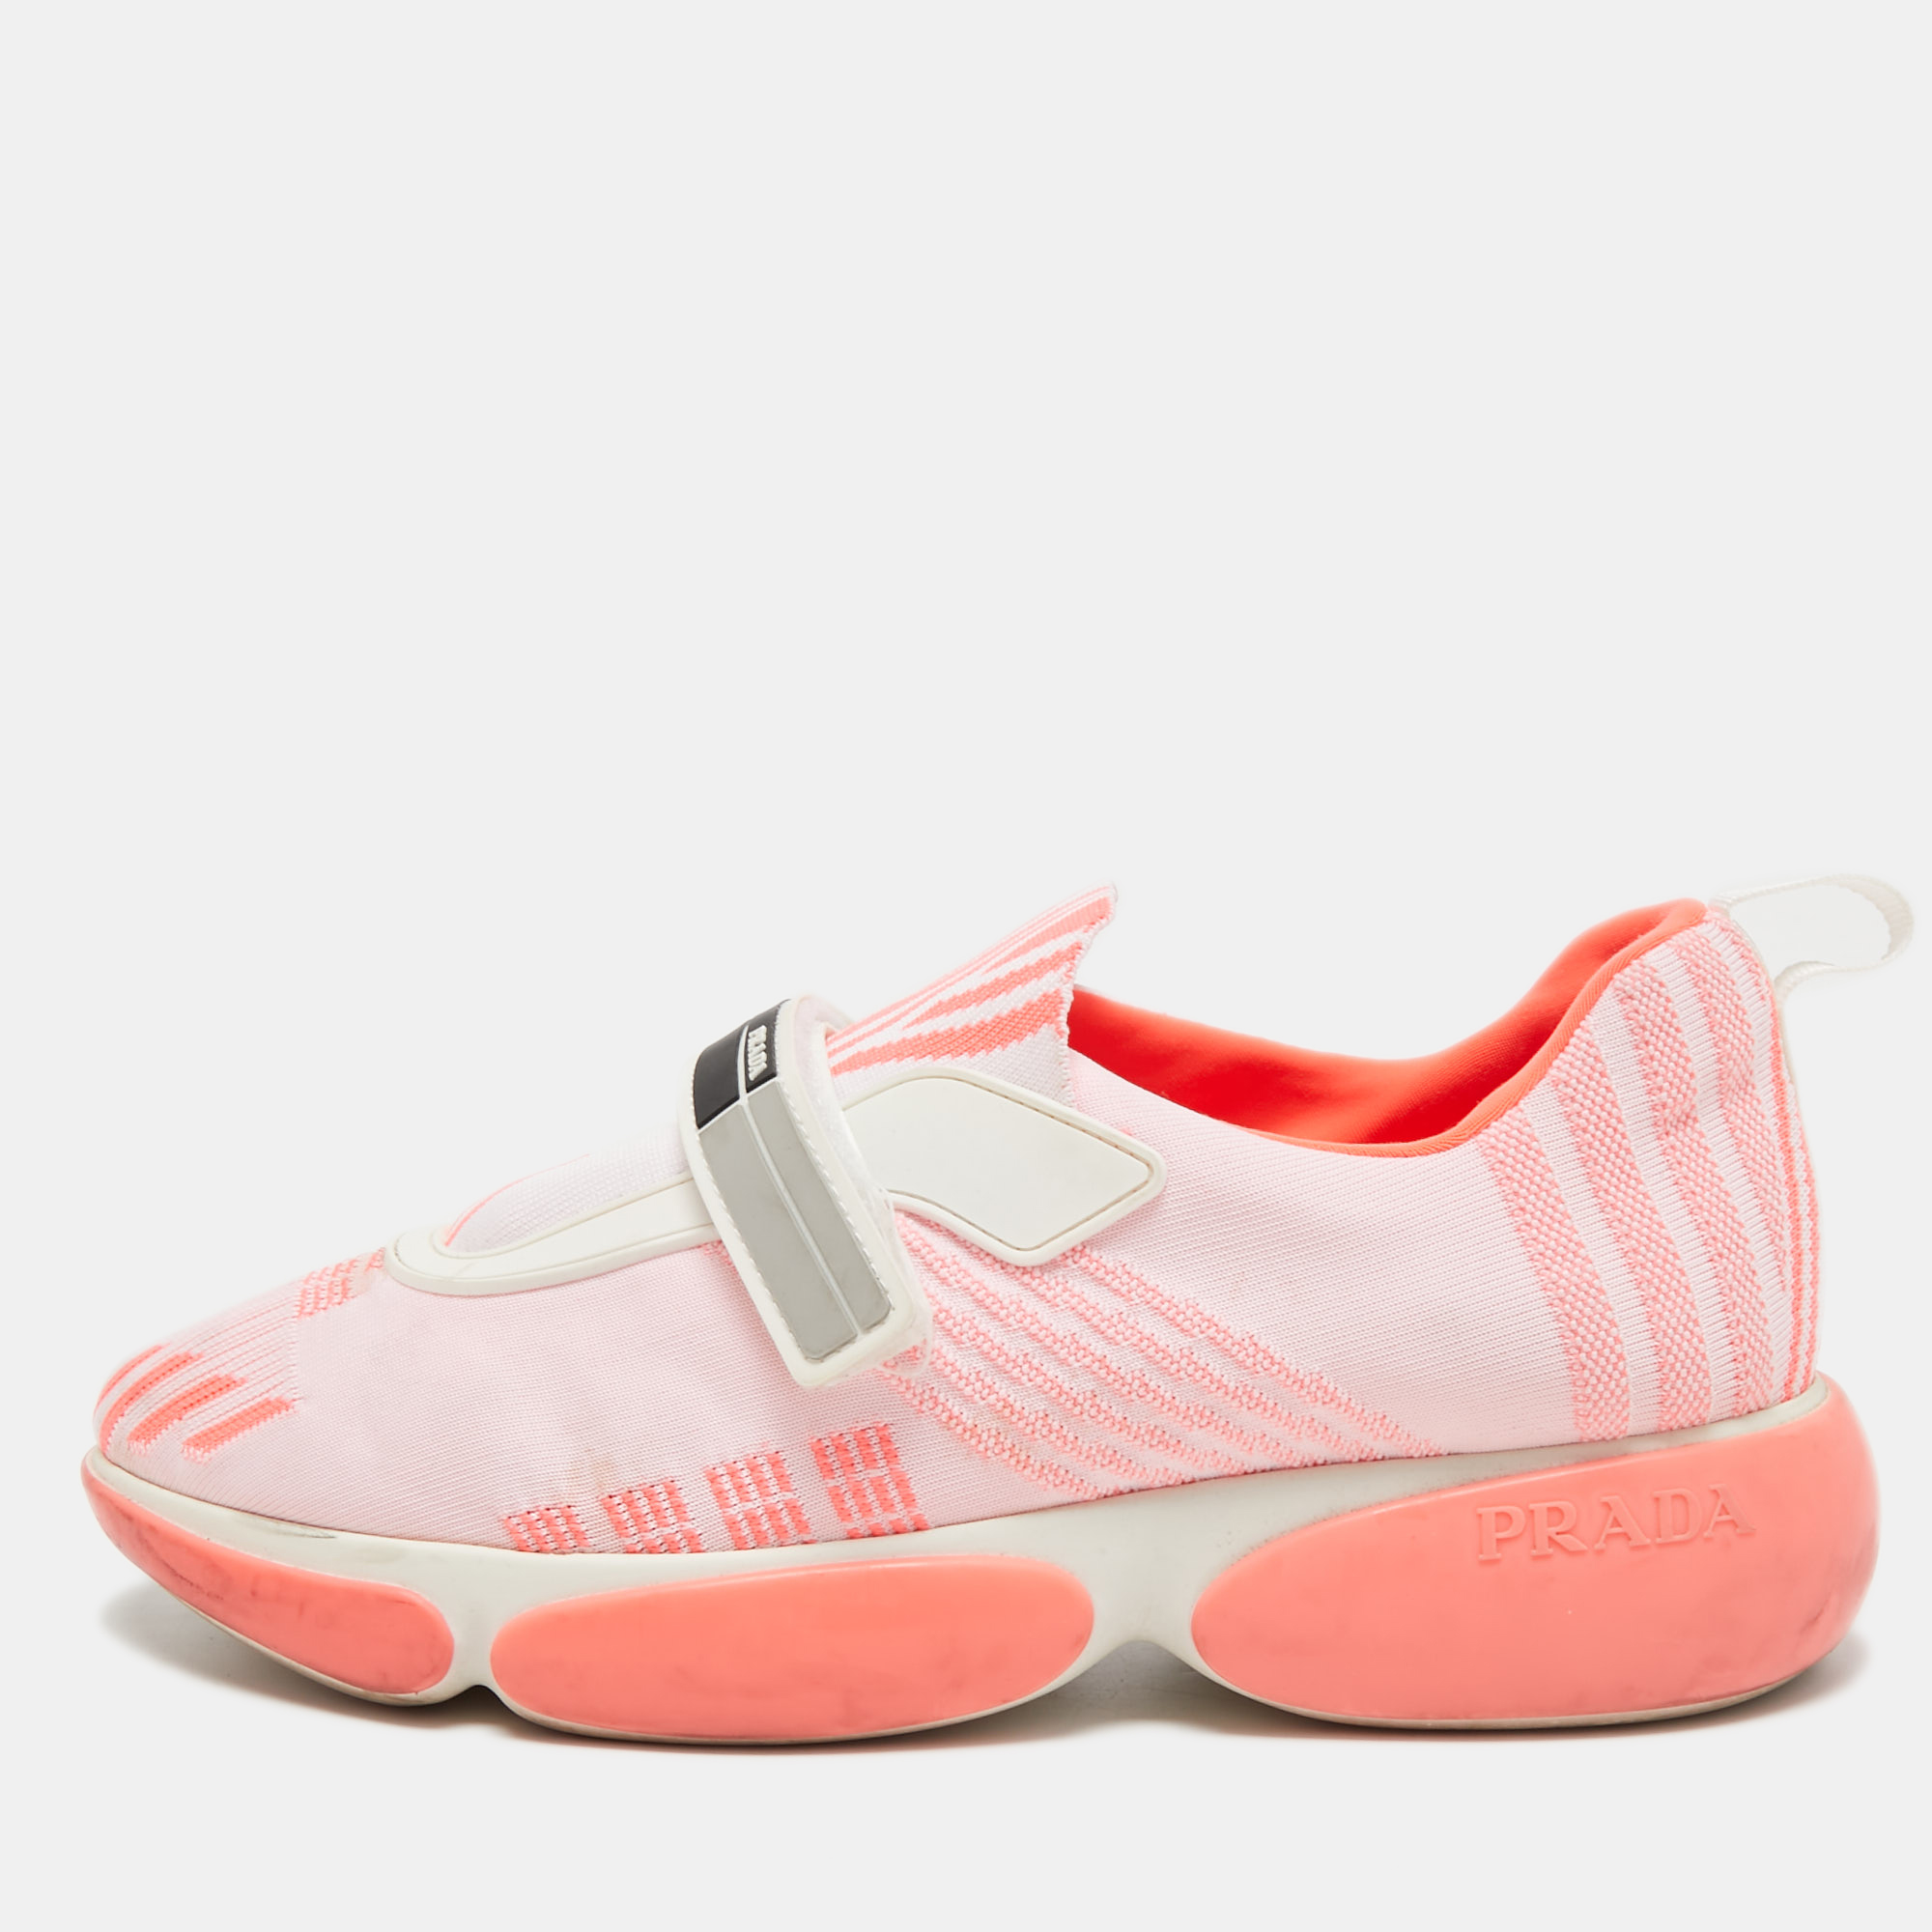 Prada pink fabric slip on sneakers size 38